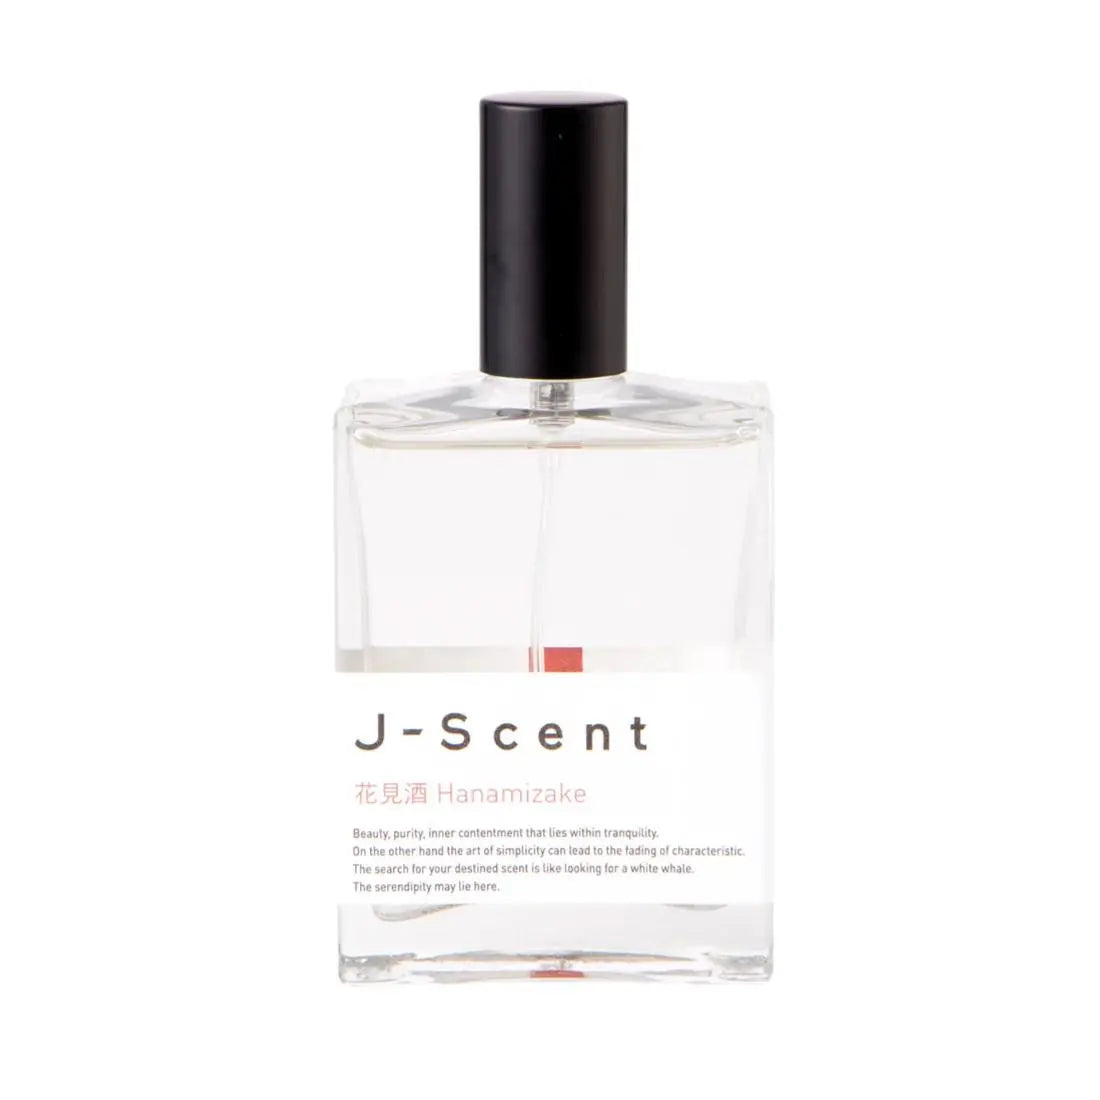 J-scent 花見酒 - 50ml